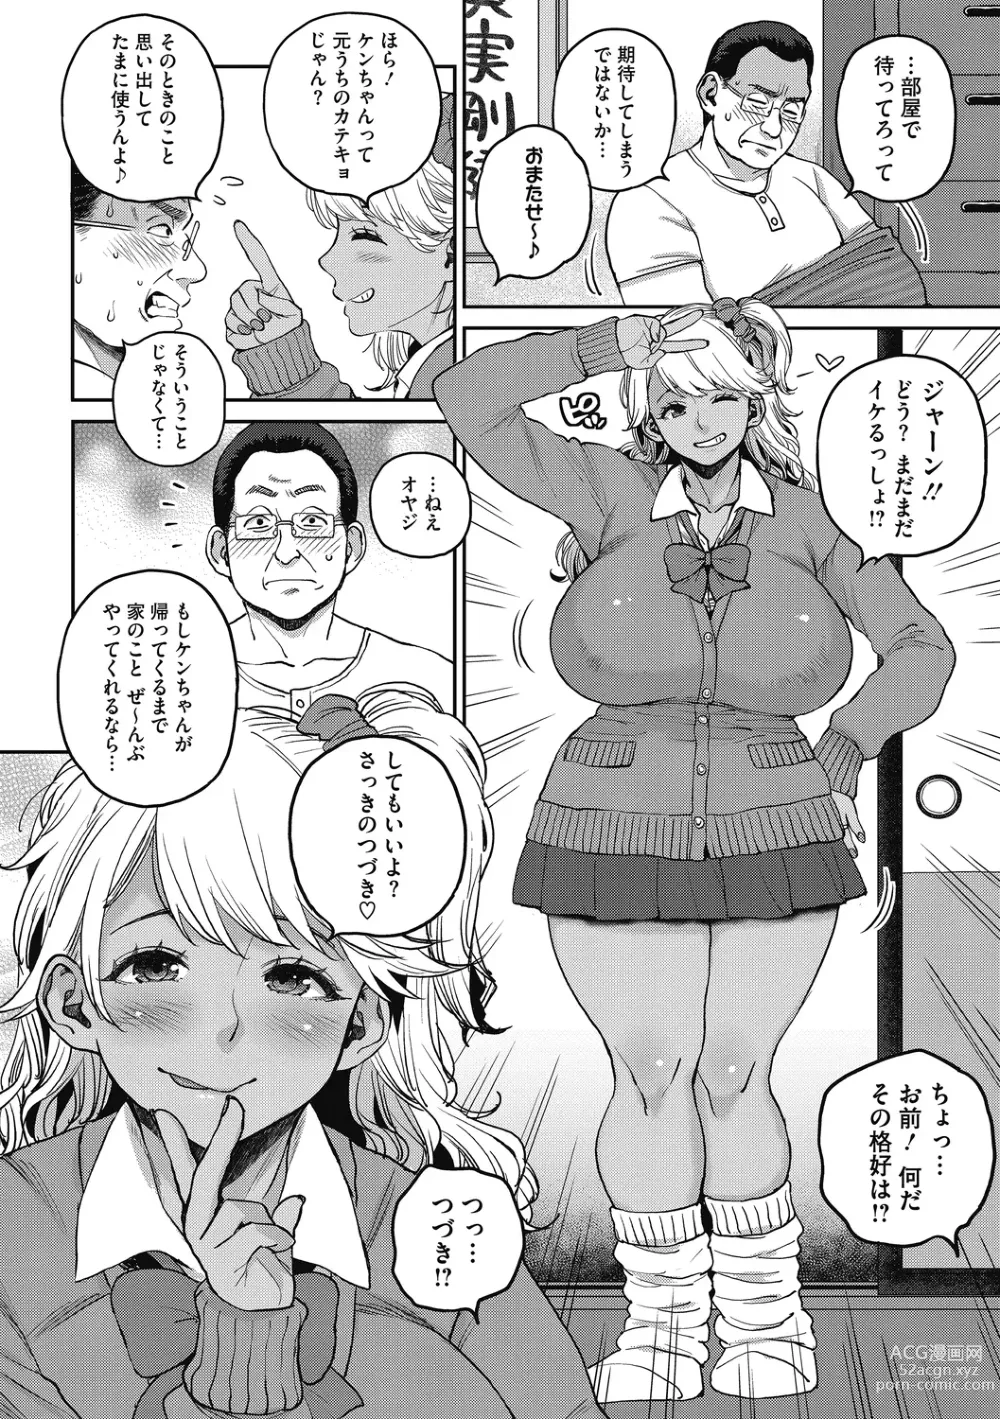 Page 10 of manga Nikudan gyaru yome, gifu (oyaji) o kuu